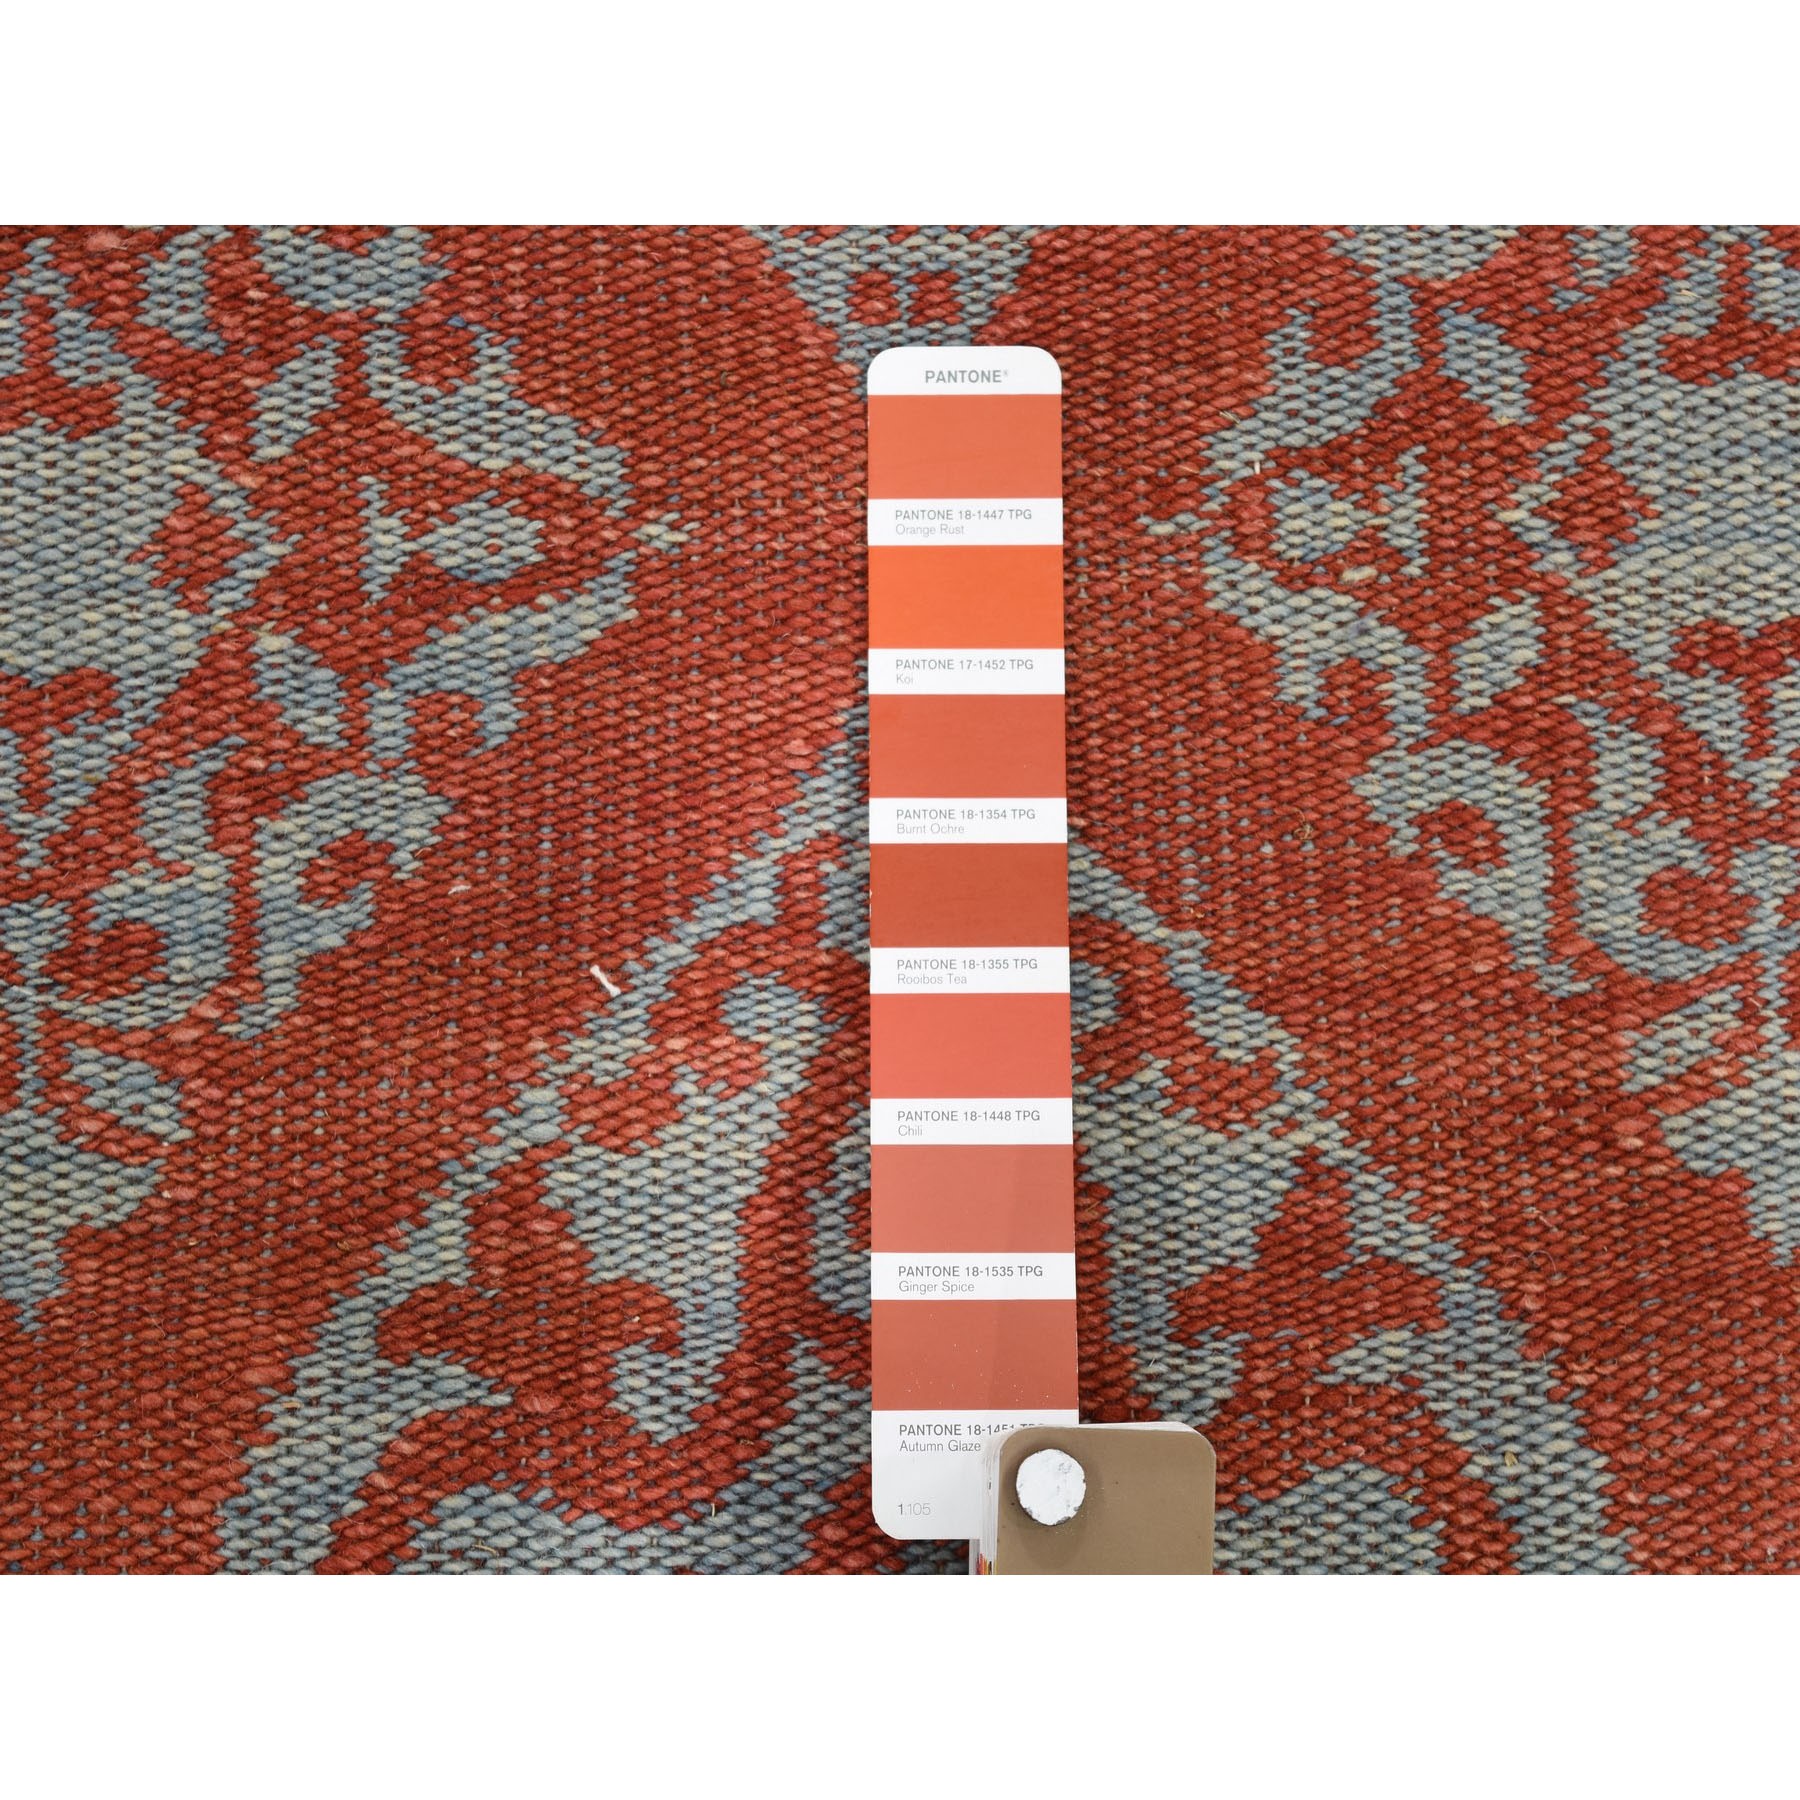 2-6 x9-9  Hand Woven Reversible Kilim Flat Weave Runner Oriental Rug 